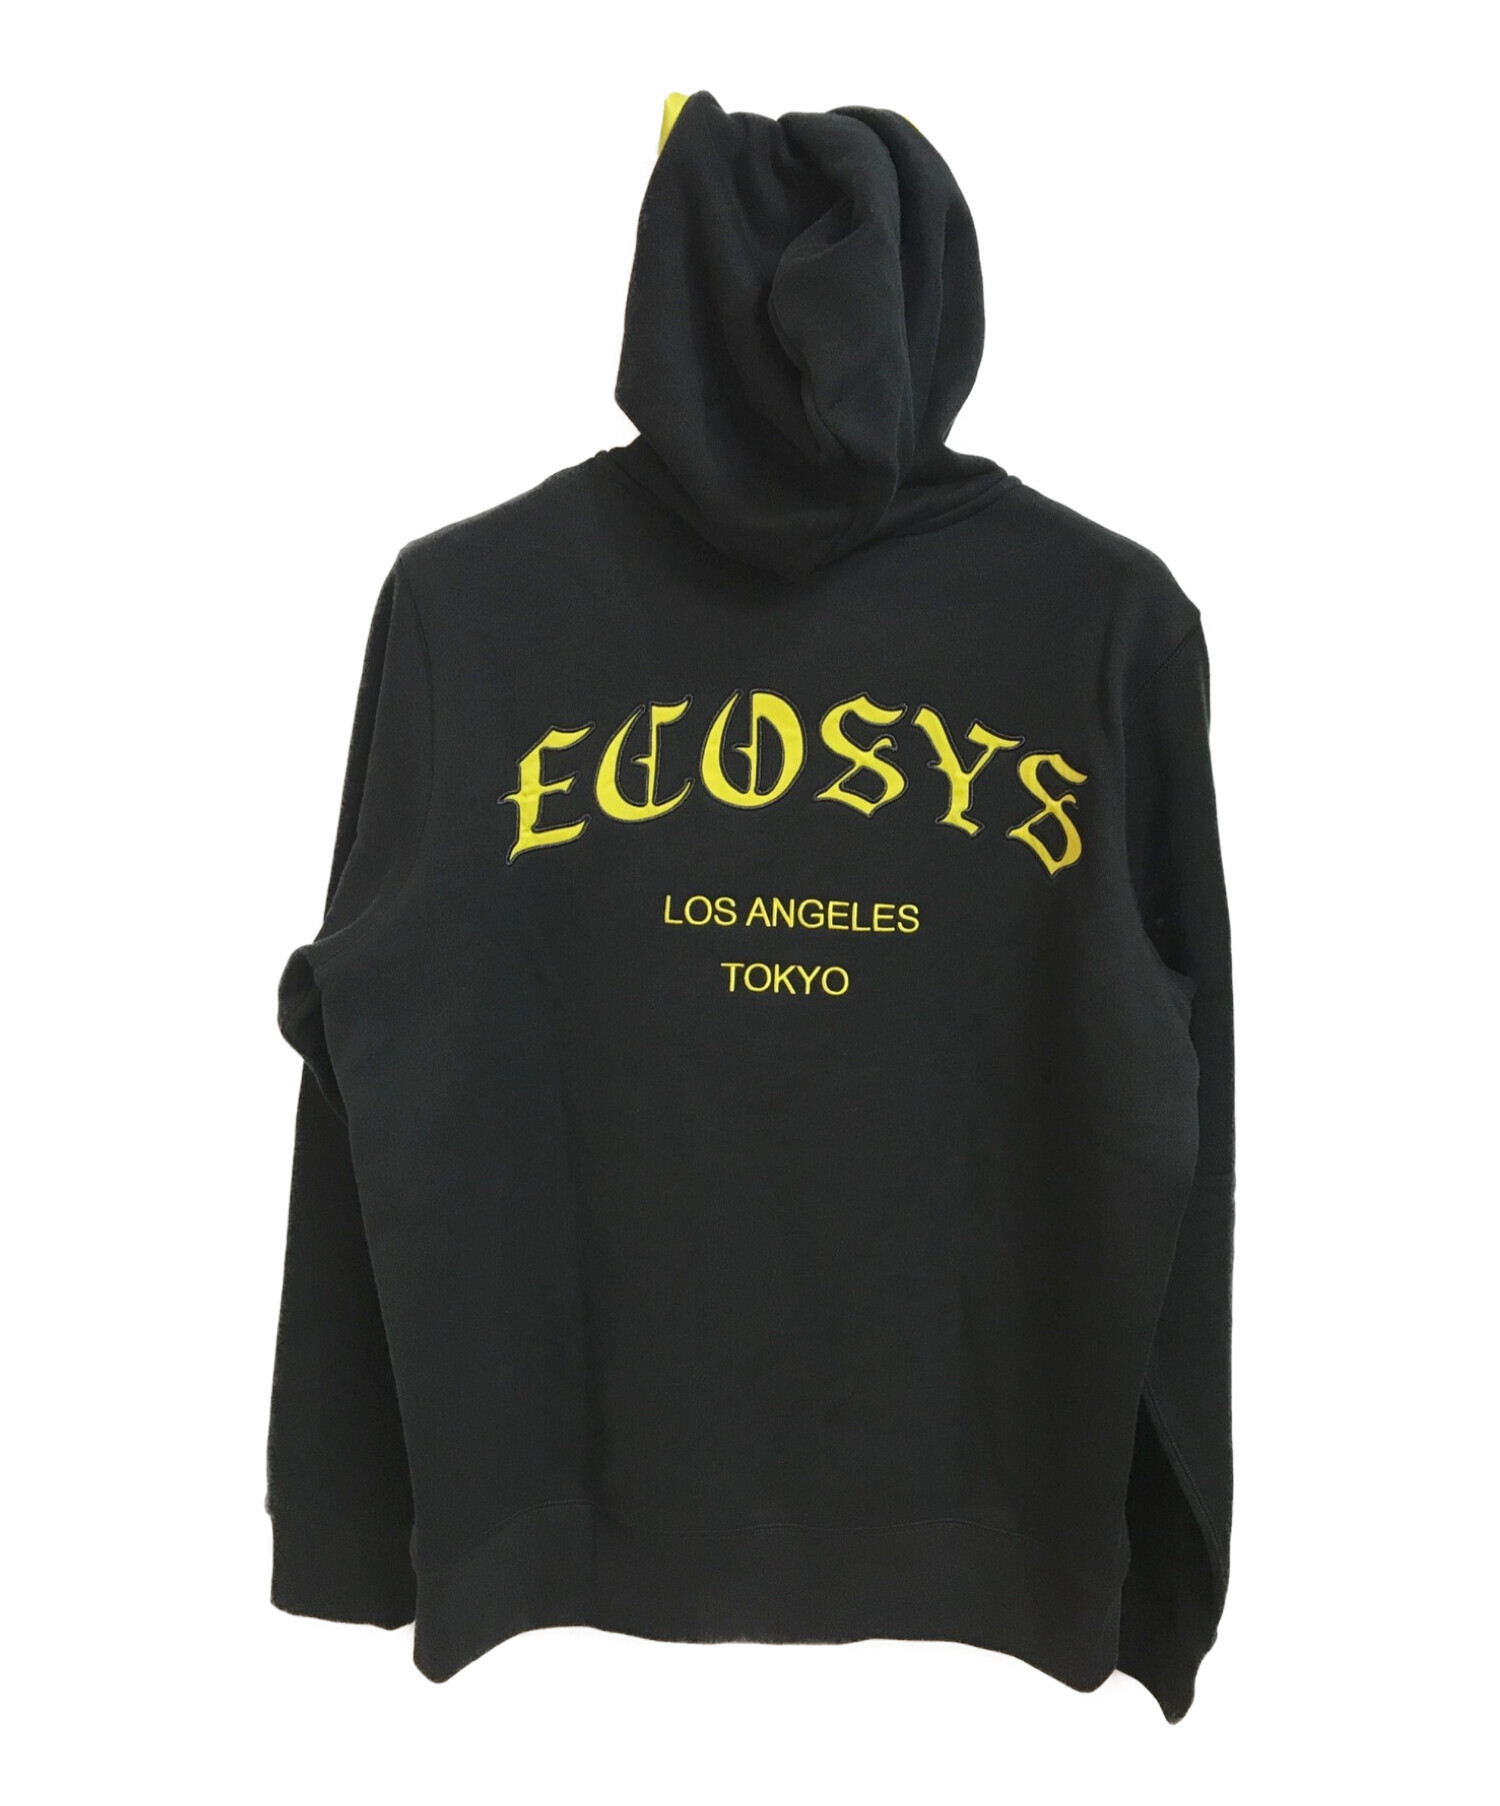 ecosys (エコシス) SUPPLIER (サプライヤー) コラボジップパーカー ブラック サイズ:M